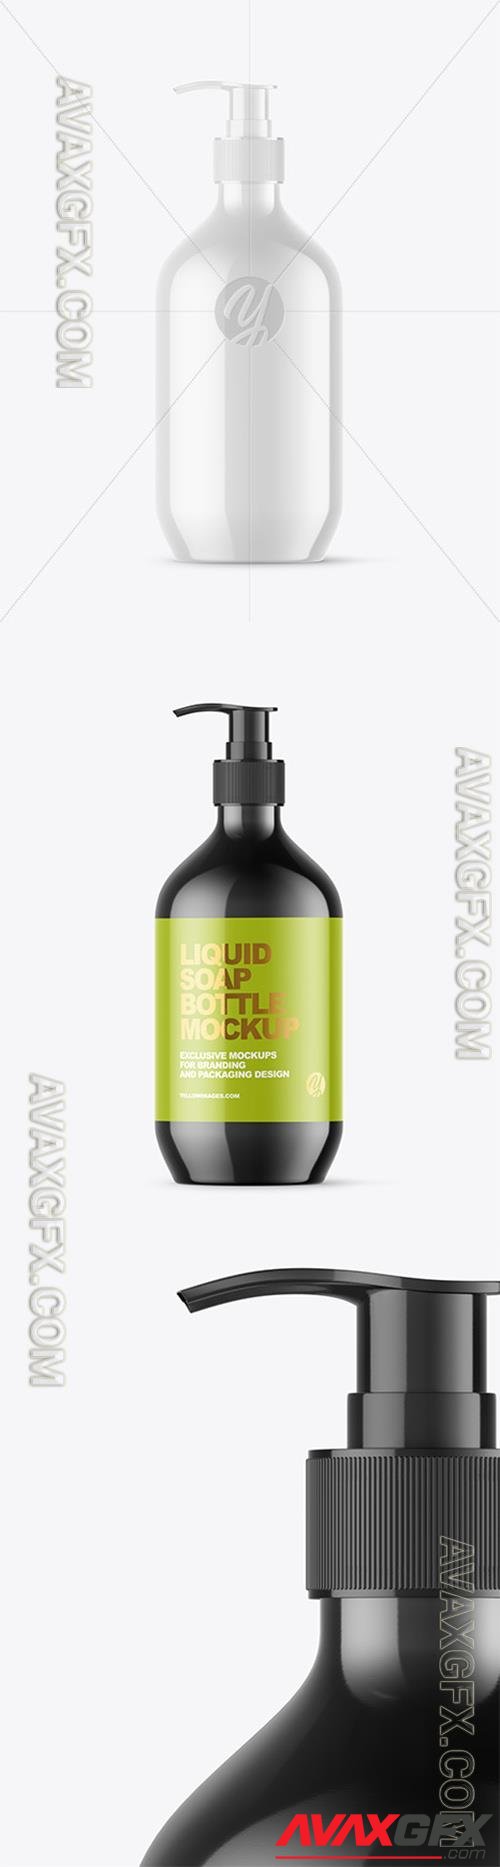 Glossy Liquid Soap Bottle With Pump Mockup 88023 TIF